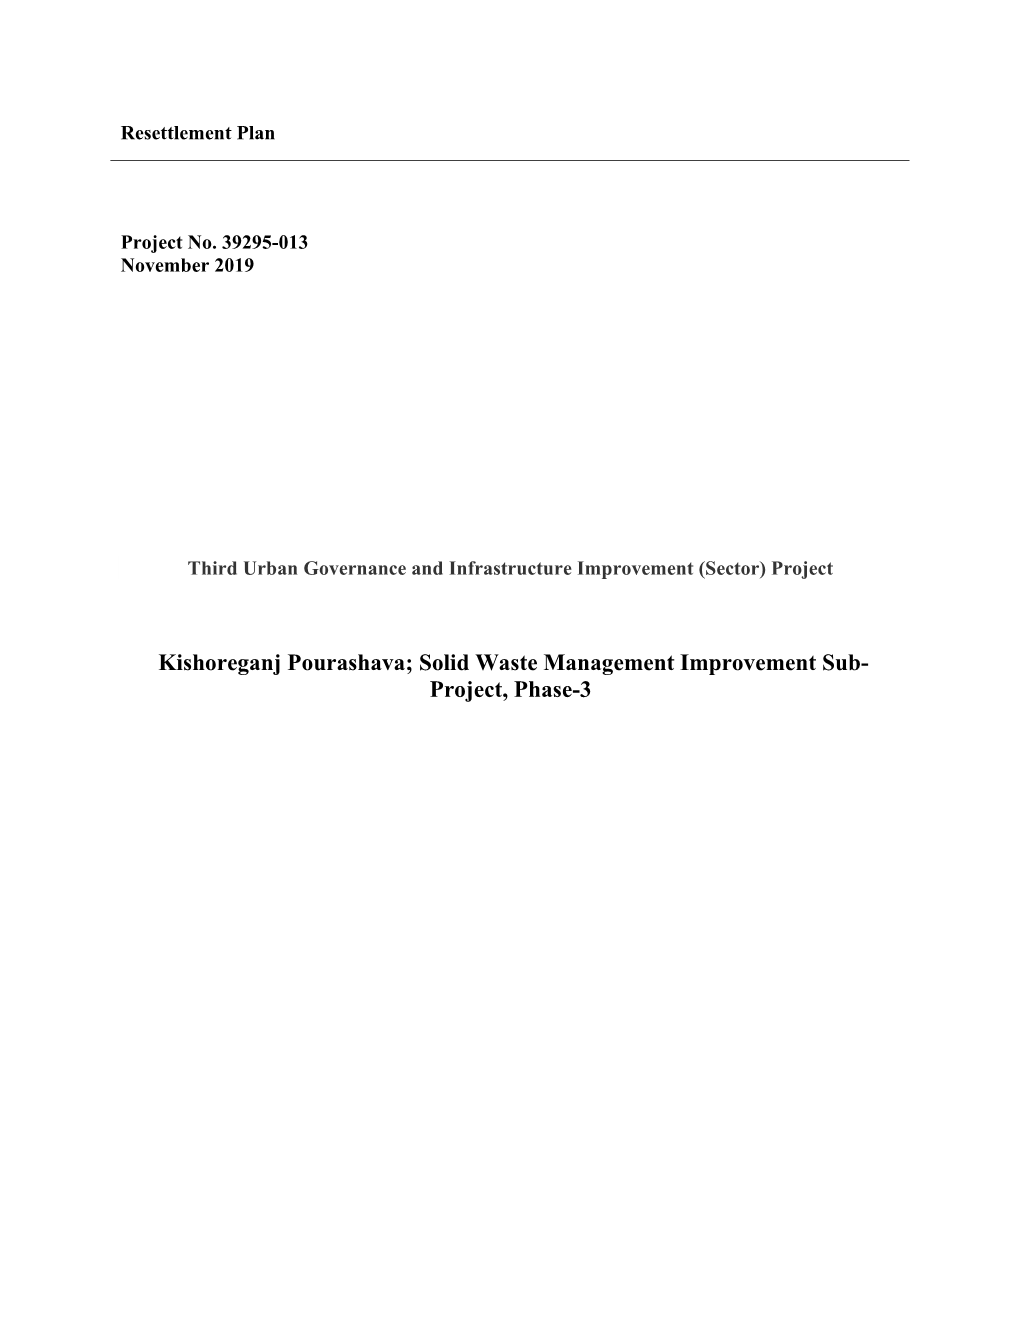 39295-013: Third Urban Governance and Infrastructure Improvement